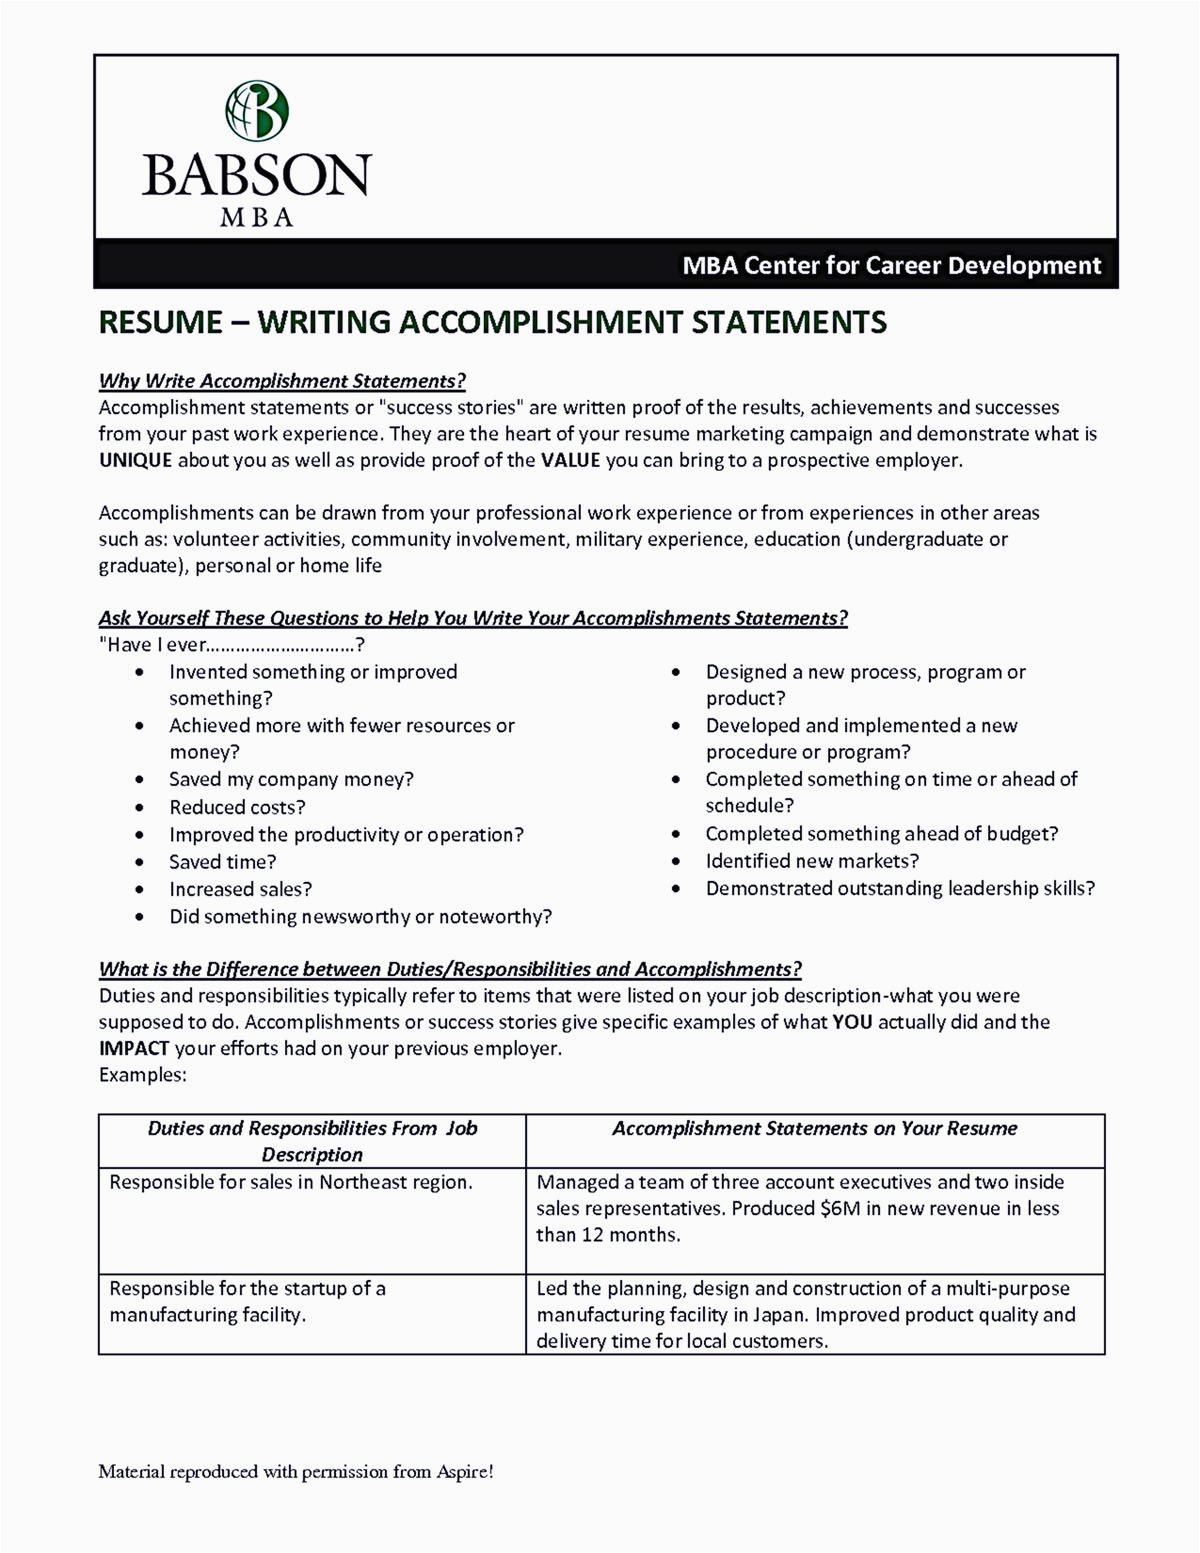 Sample List Of Accomplishments for Resume Ac Plishments Resume are Indeed Important Part Of Any